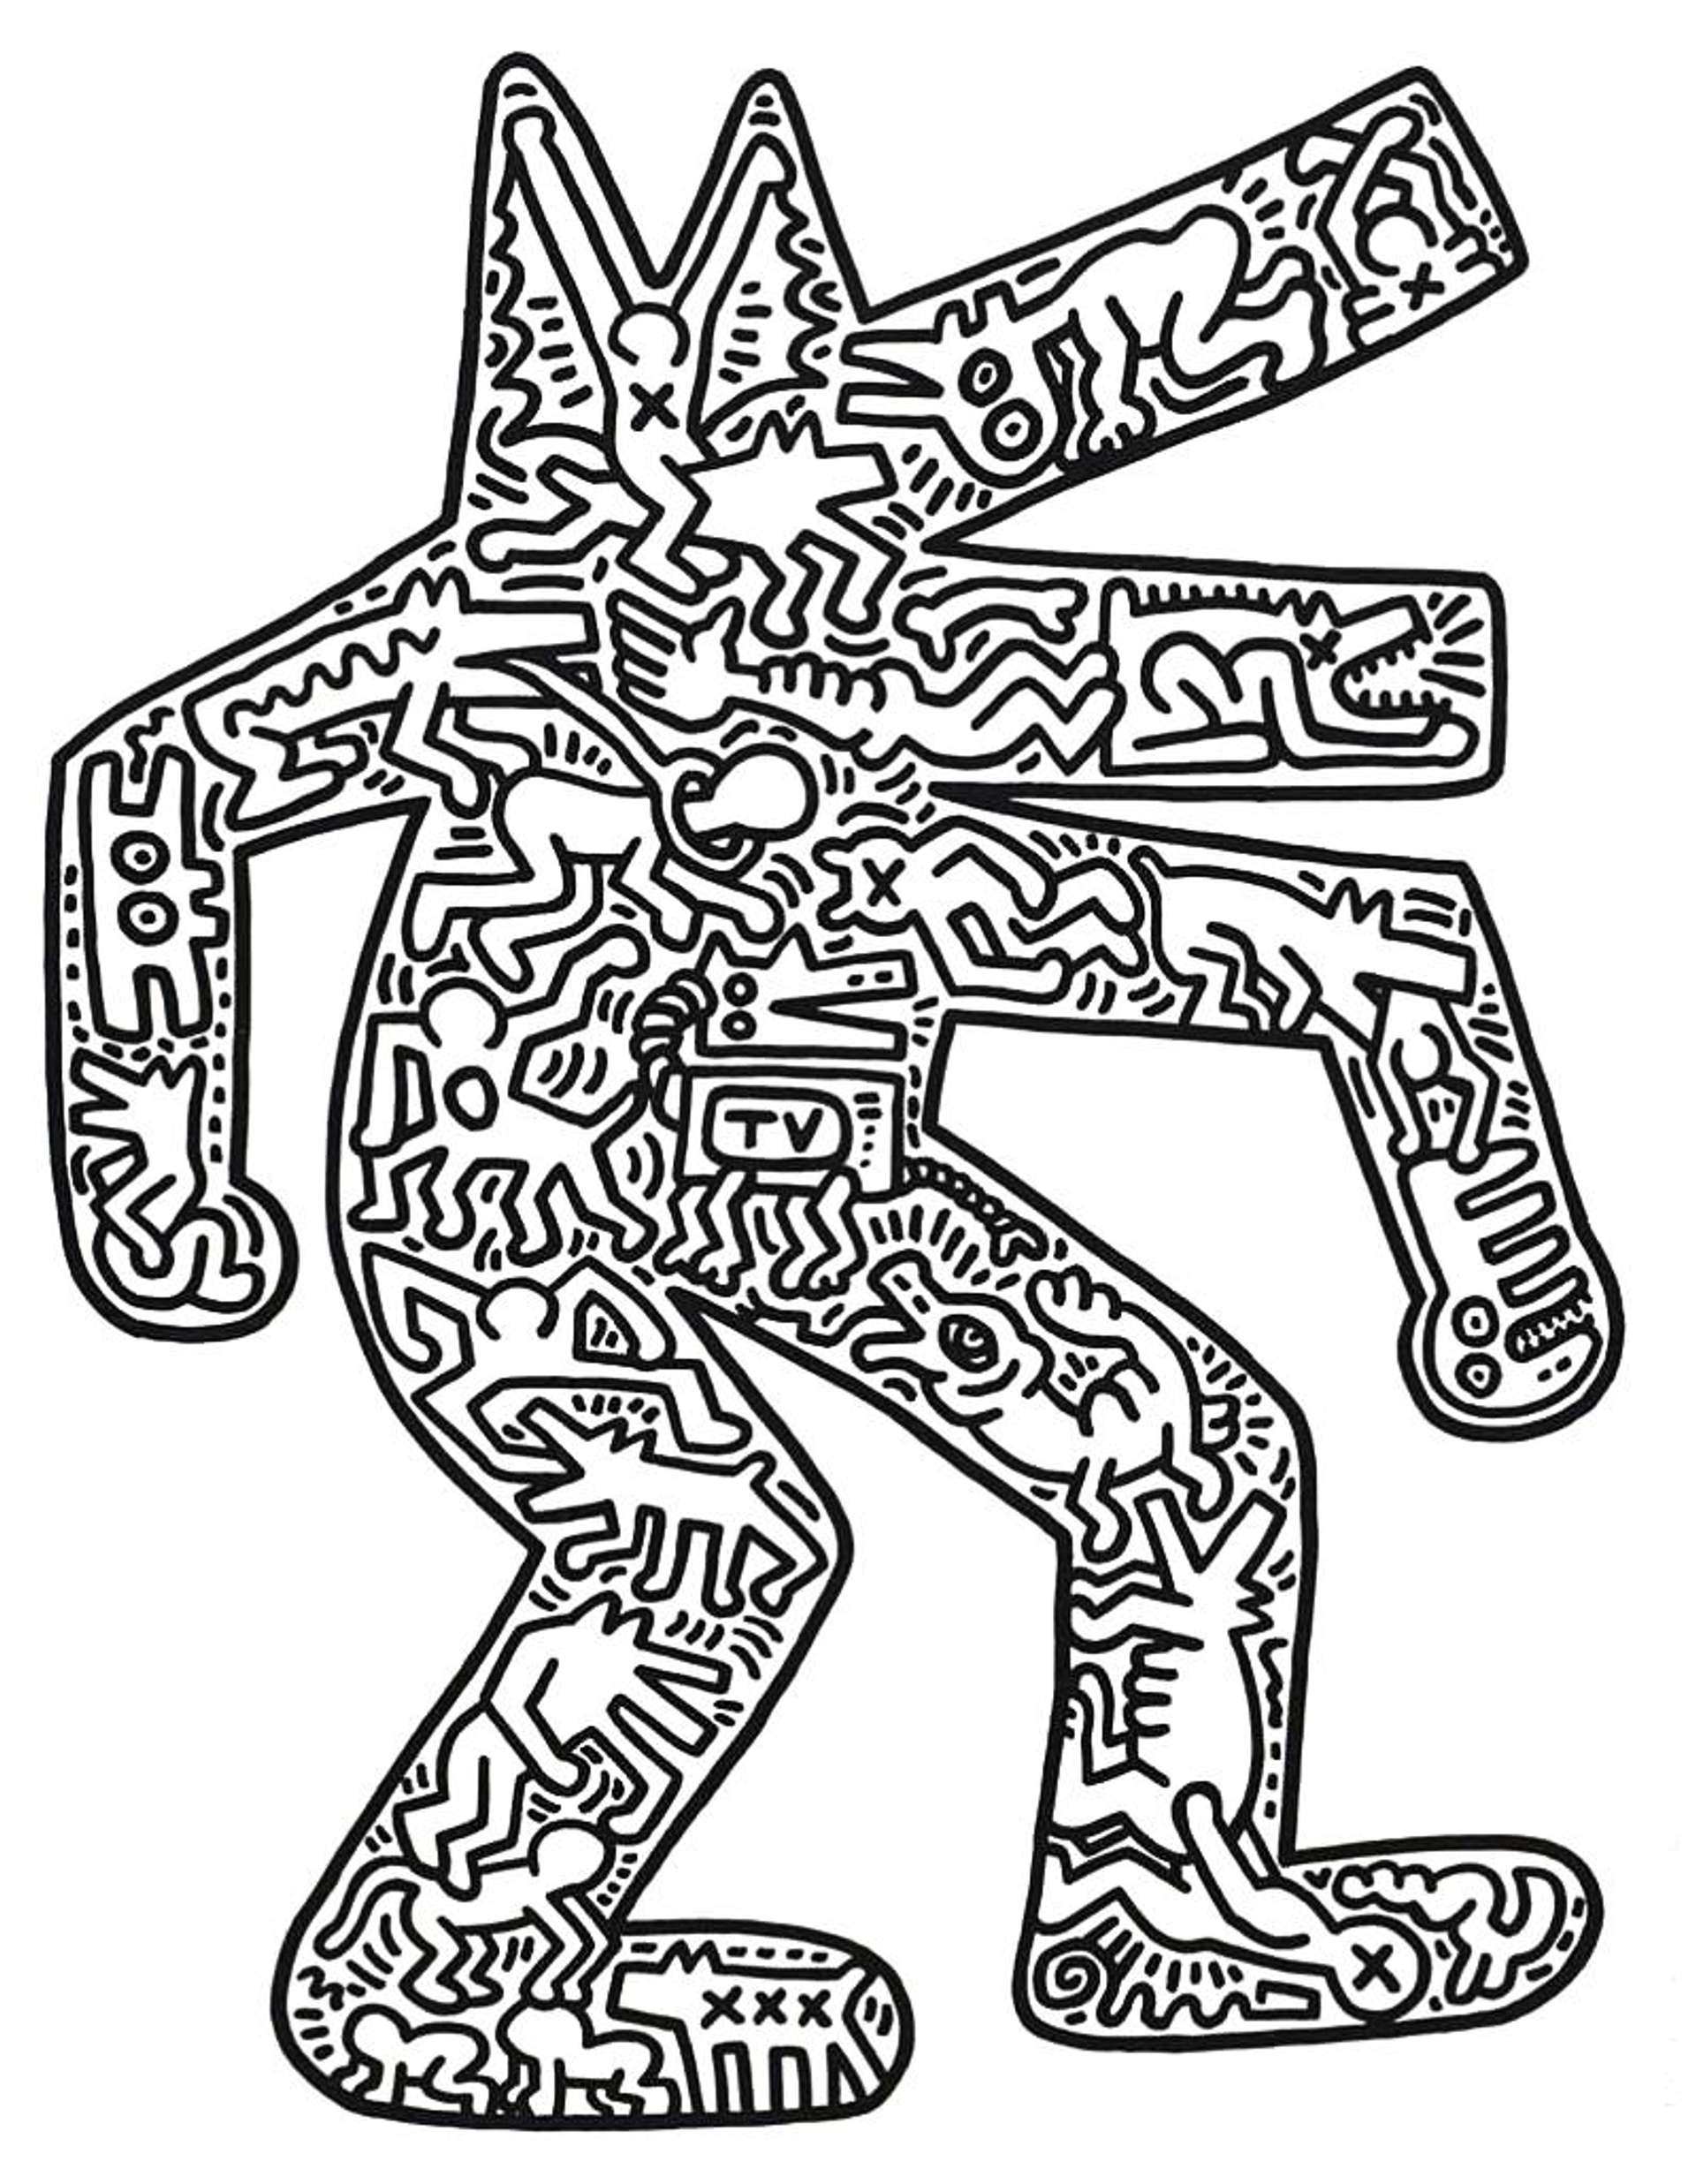 Keith Haring: Dog - Signed Print